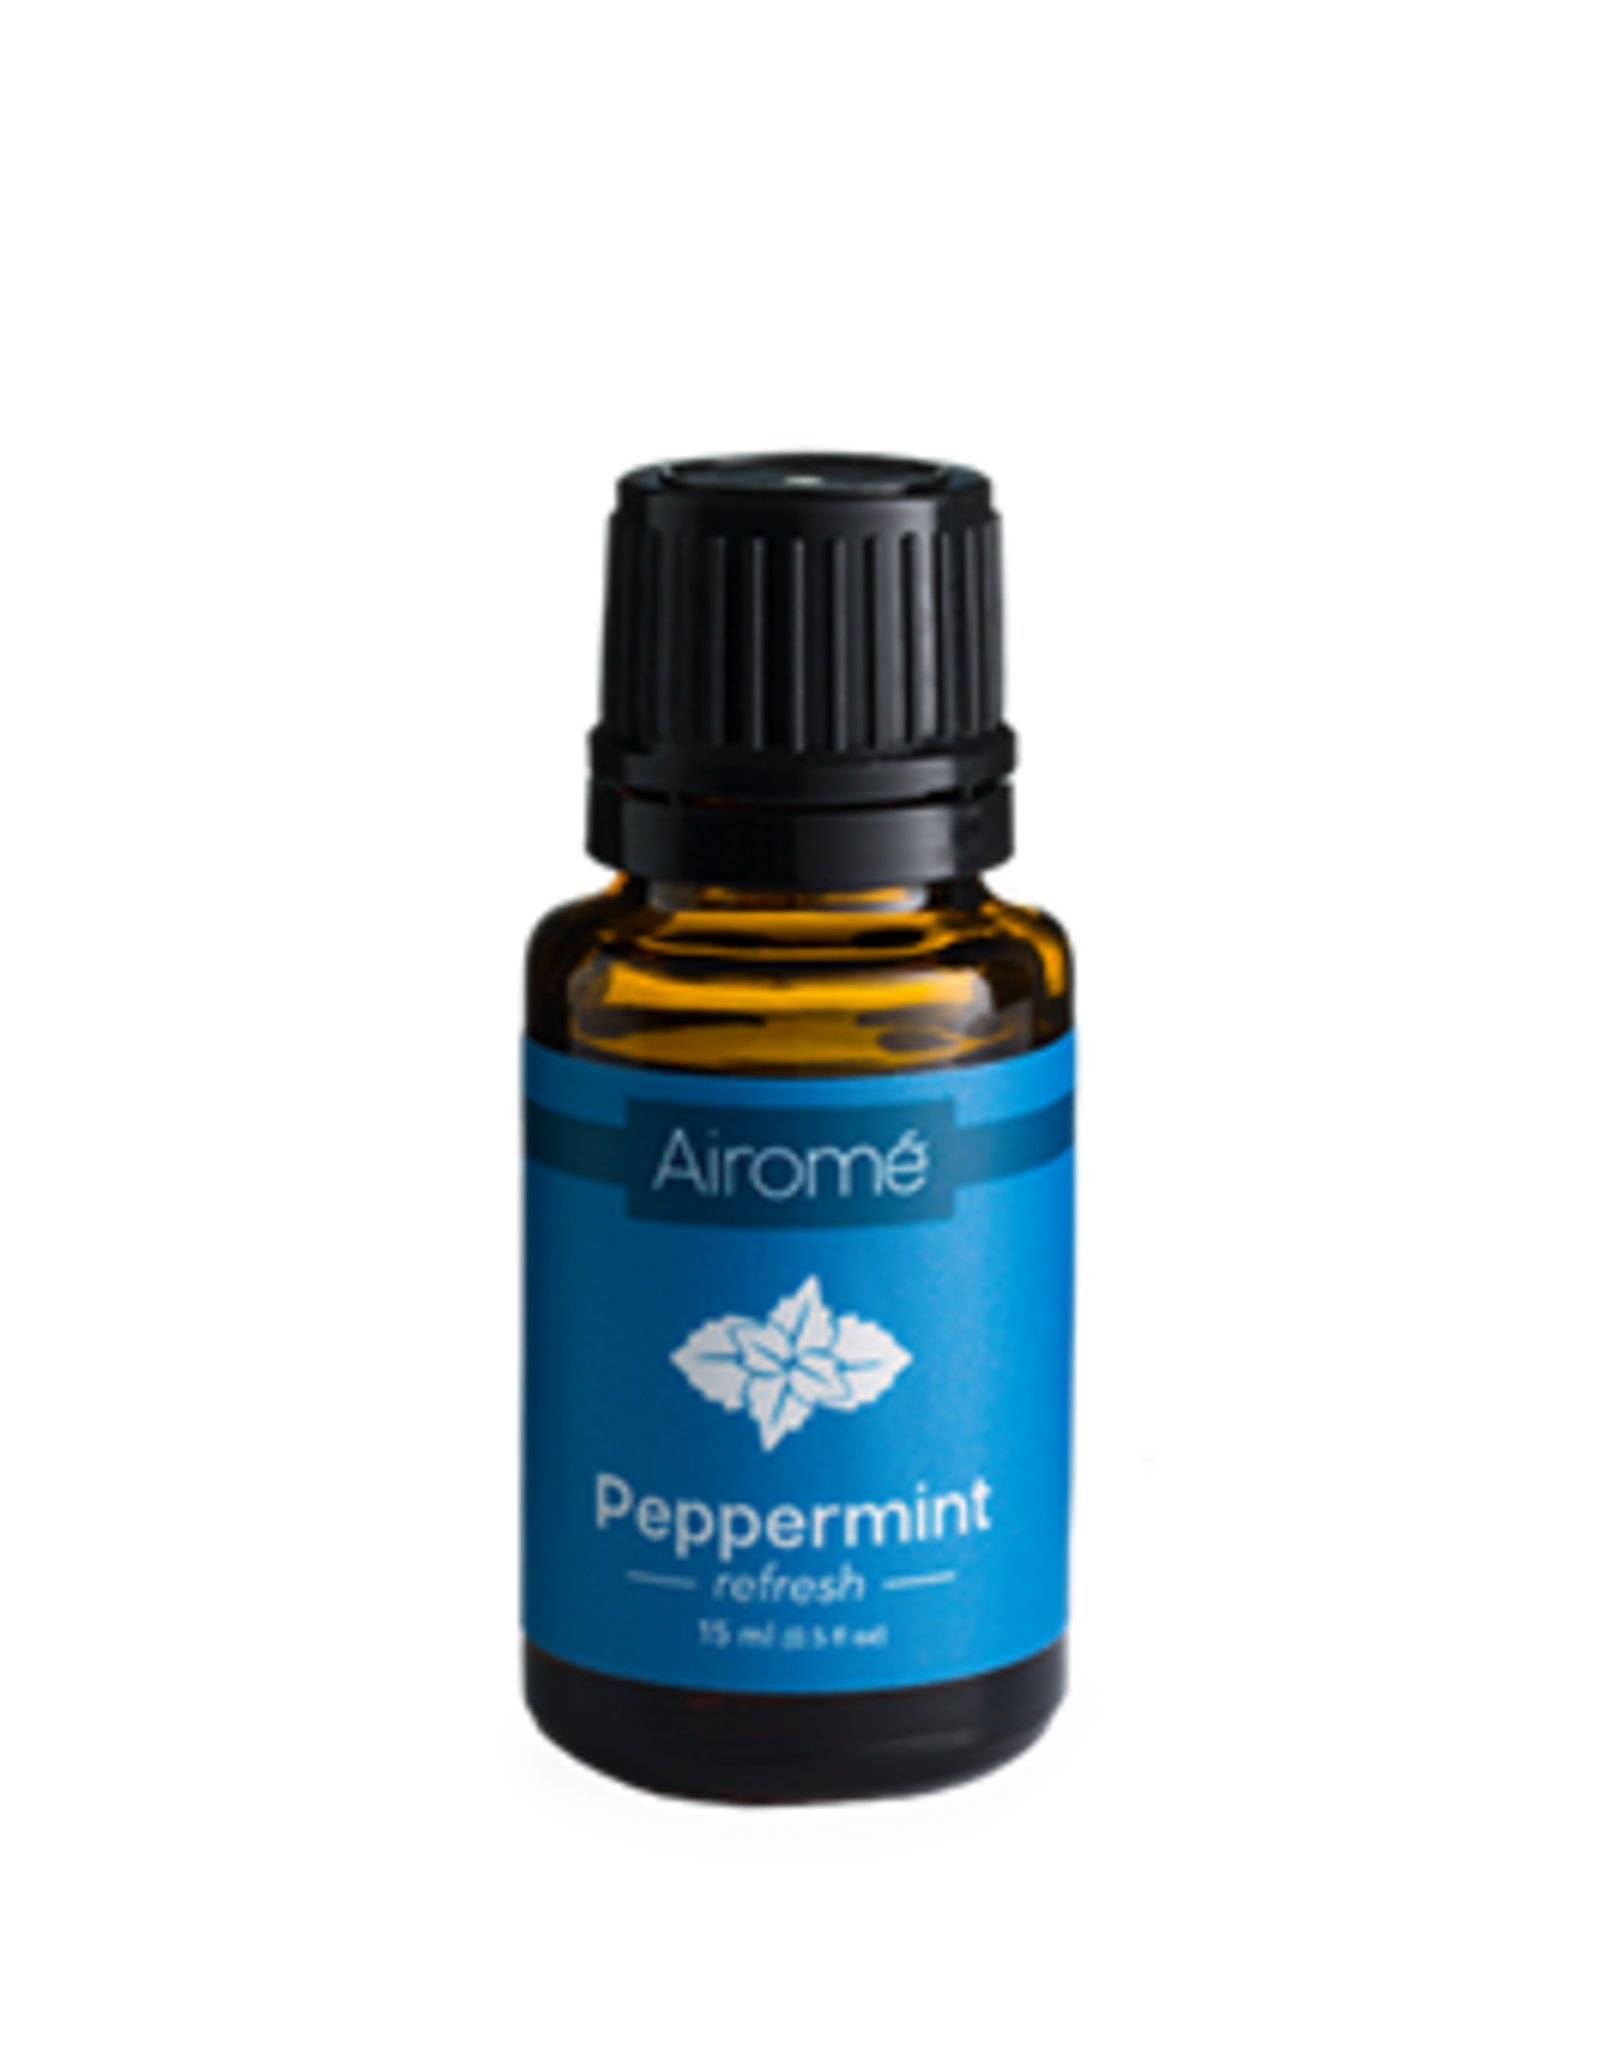 Airome Peppermint Essential Oil